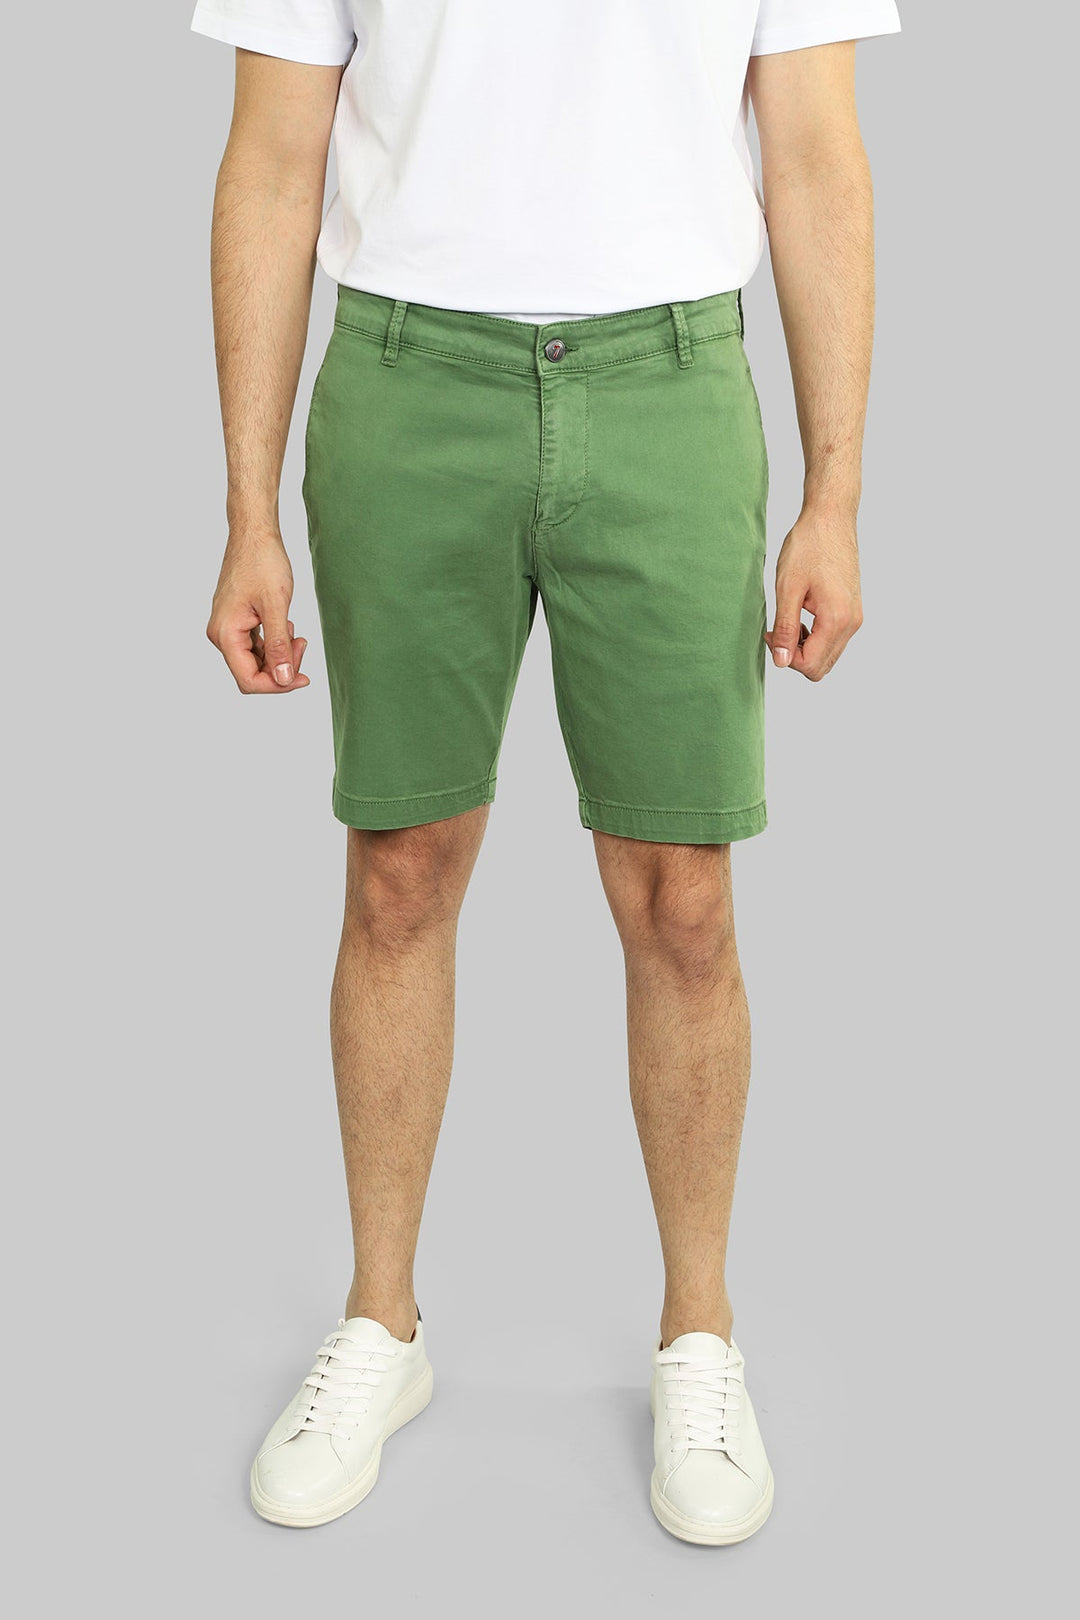 Green Shorts - 7 Downie St.®